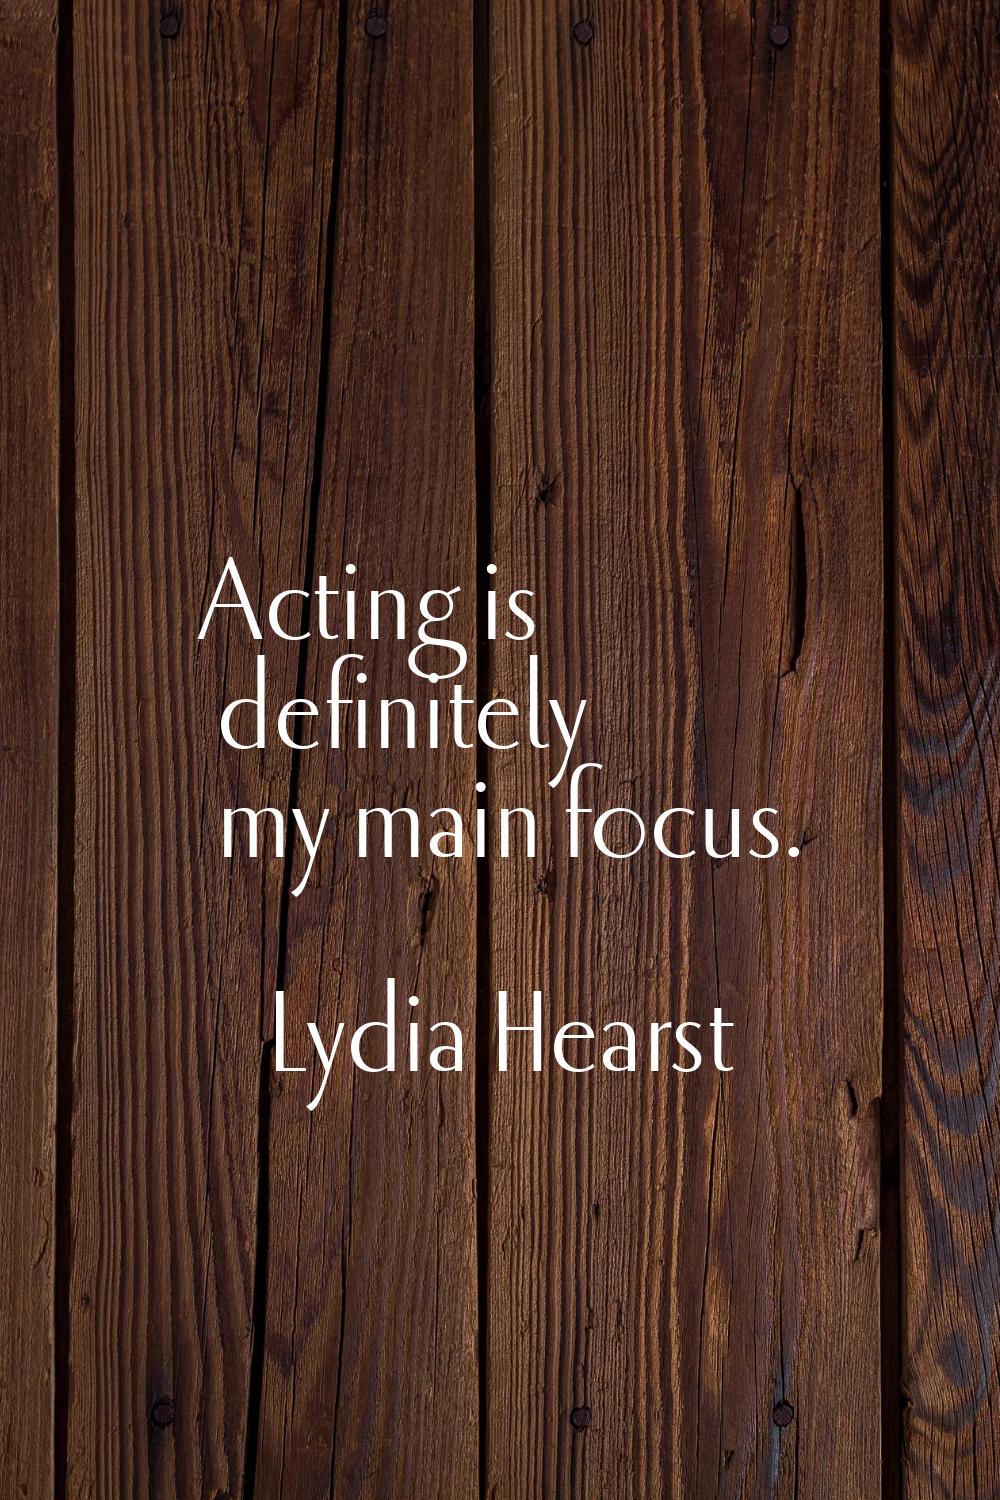 Acting is definitely my main focus.